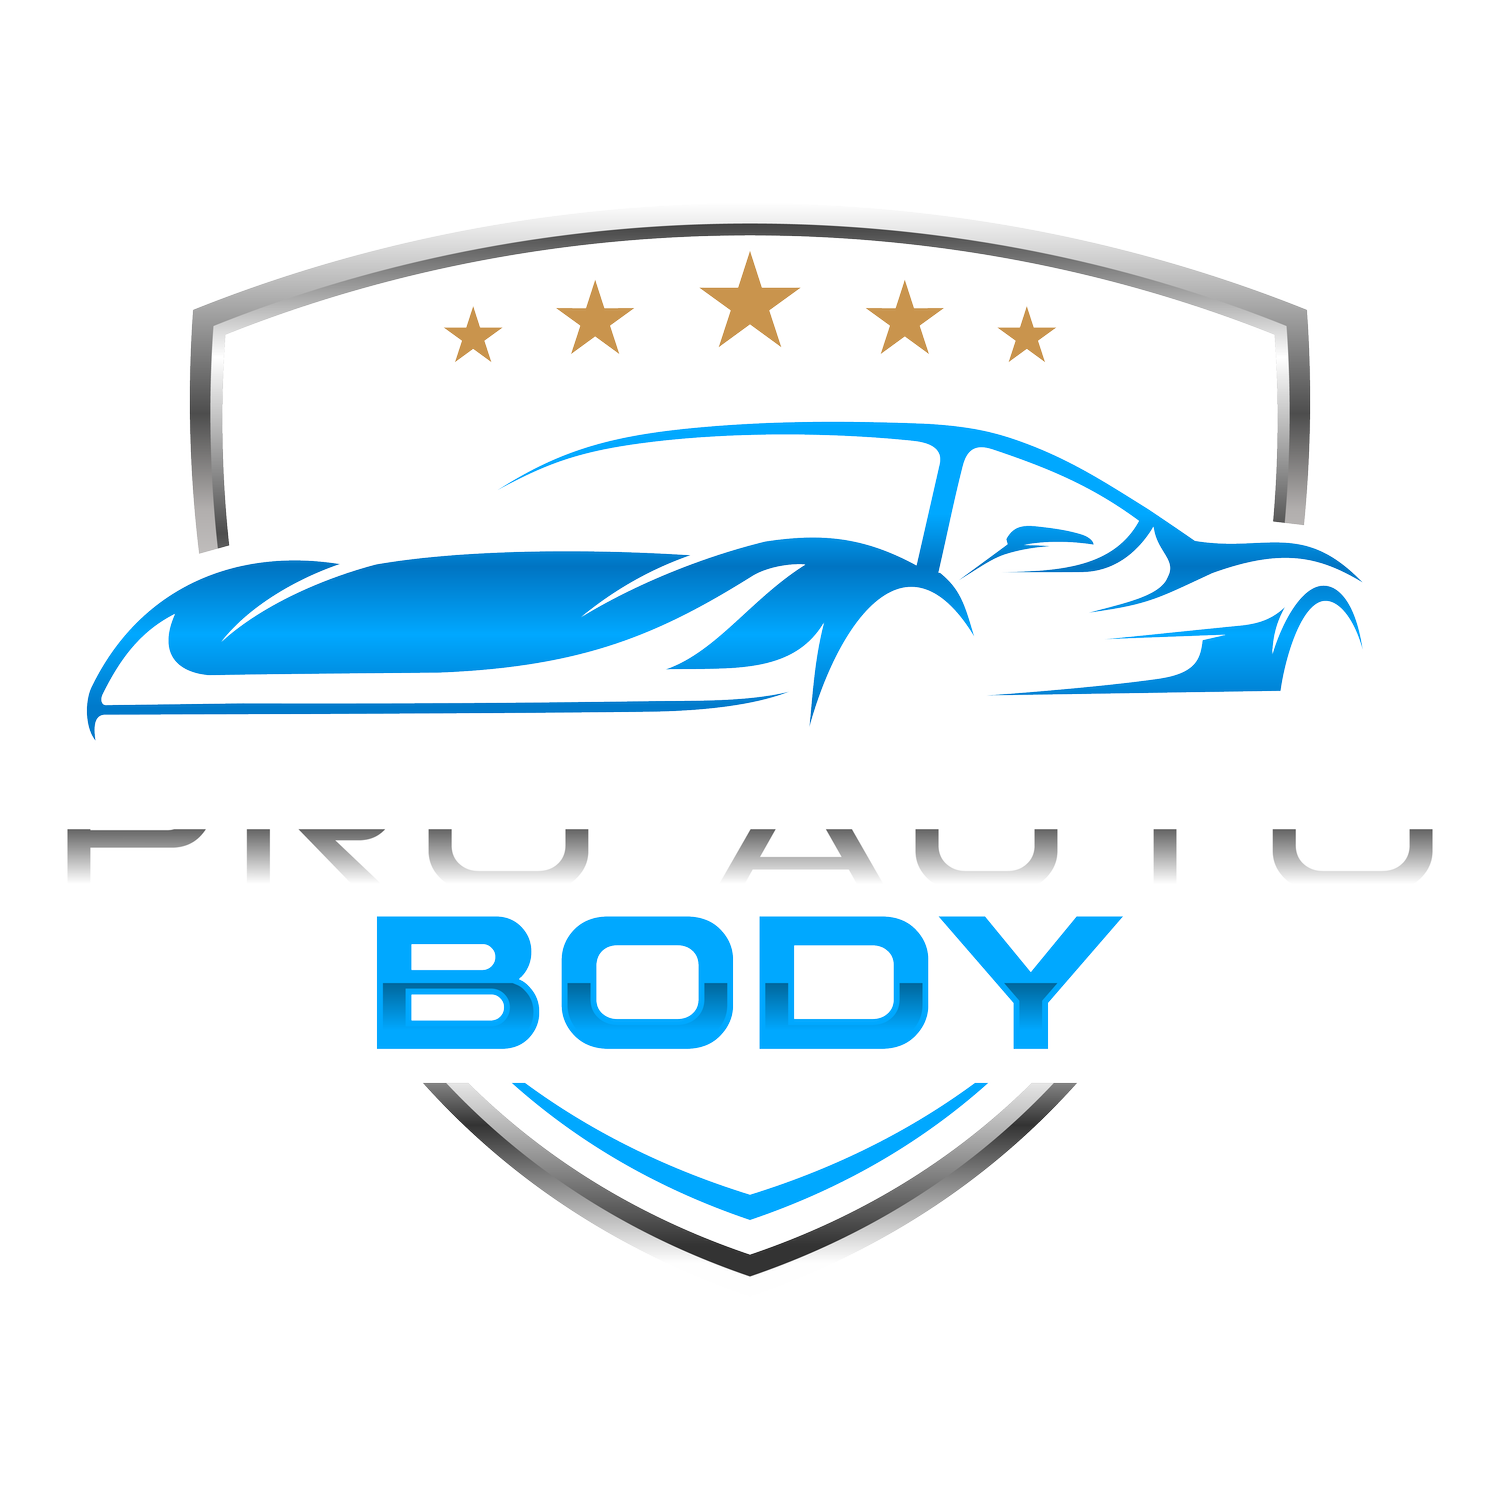 Pro Auto Body